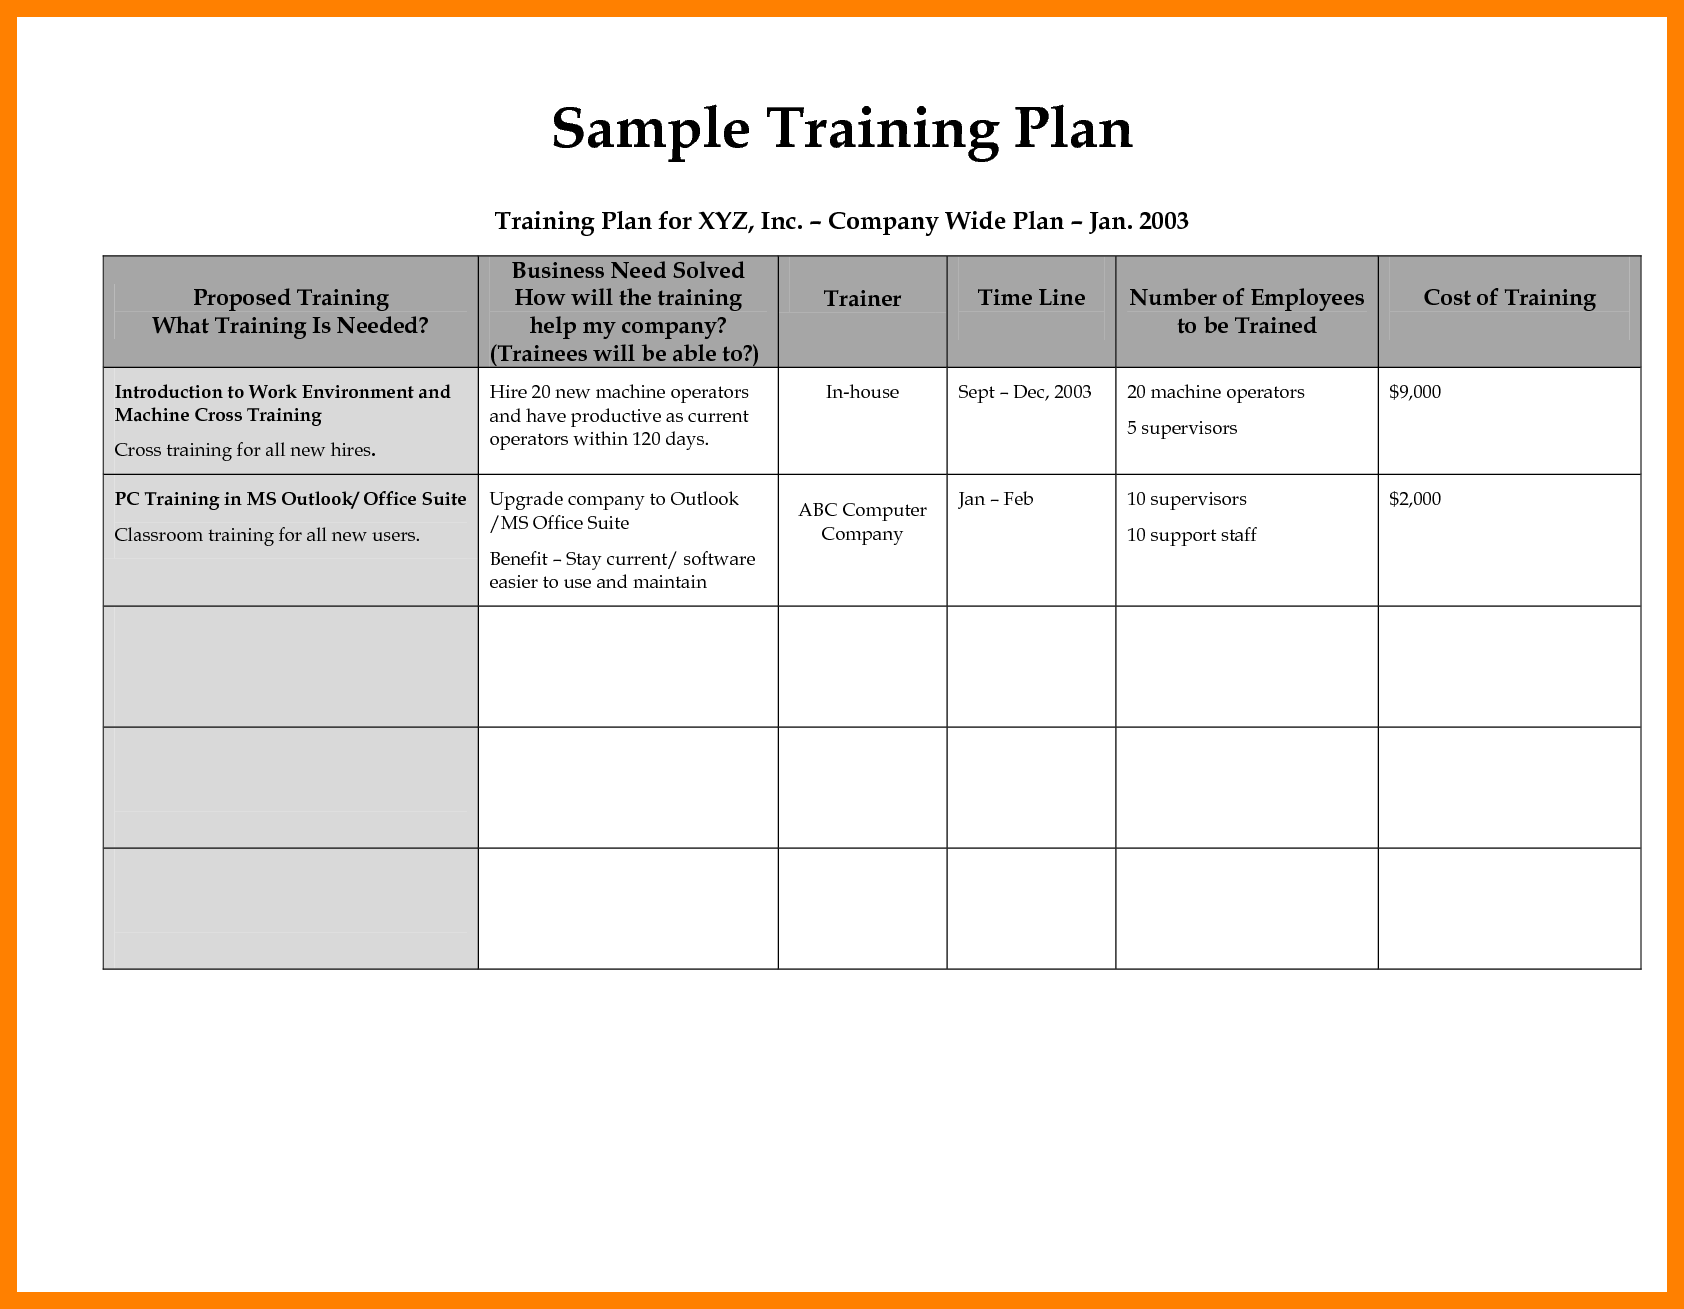 Employee Training Schedule Template